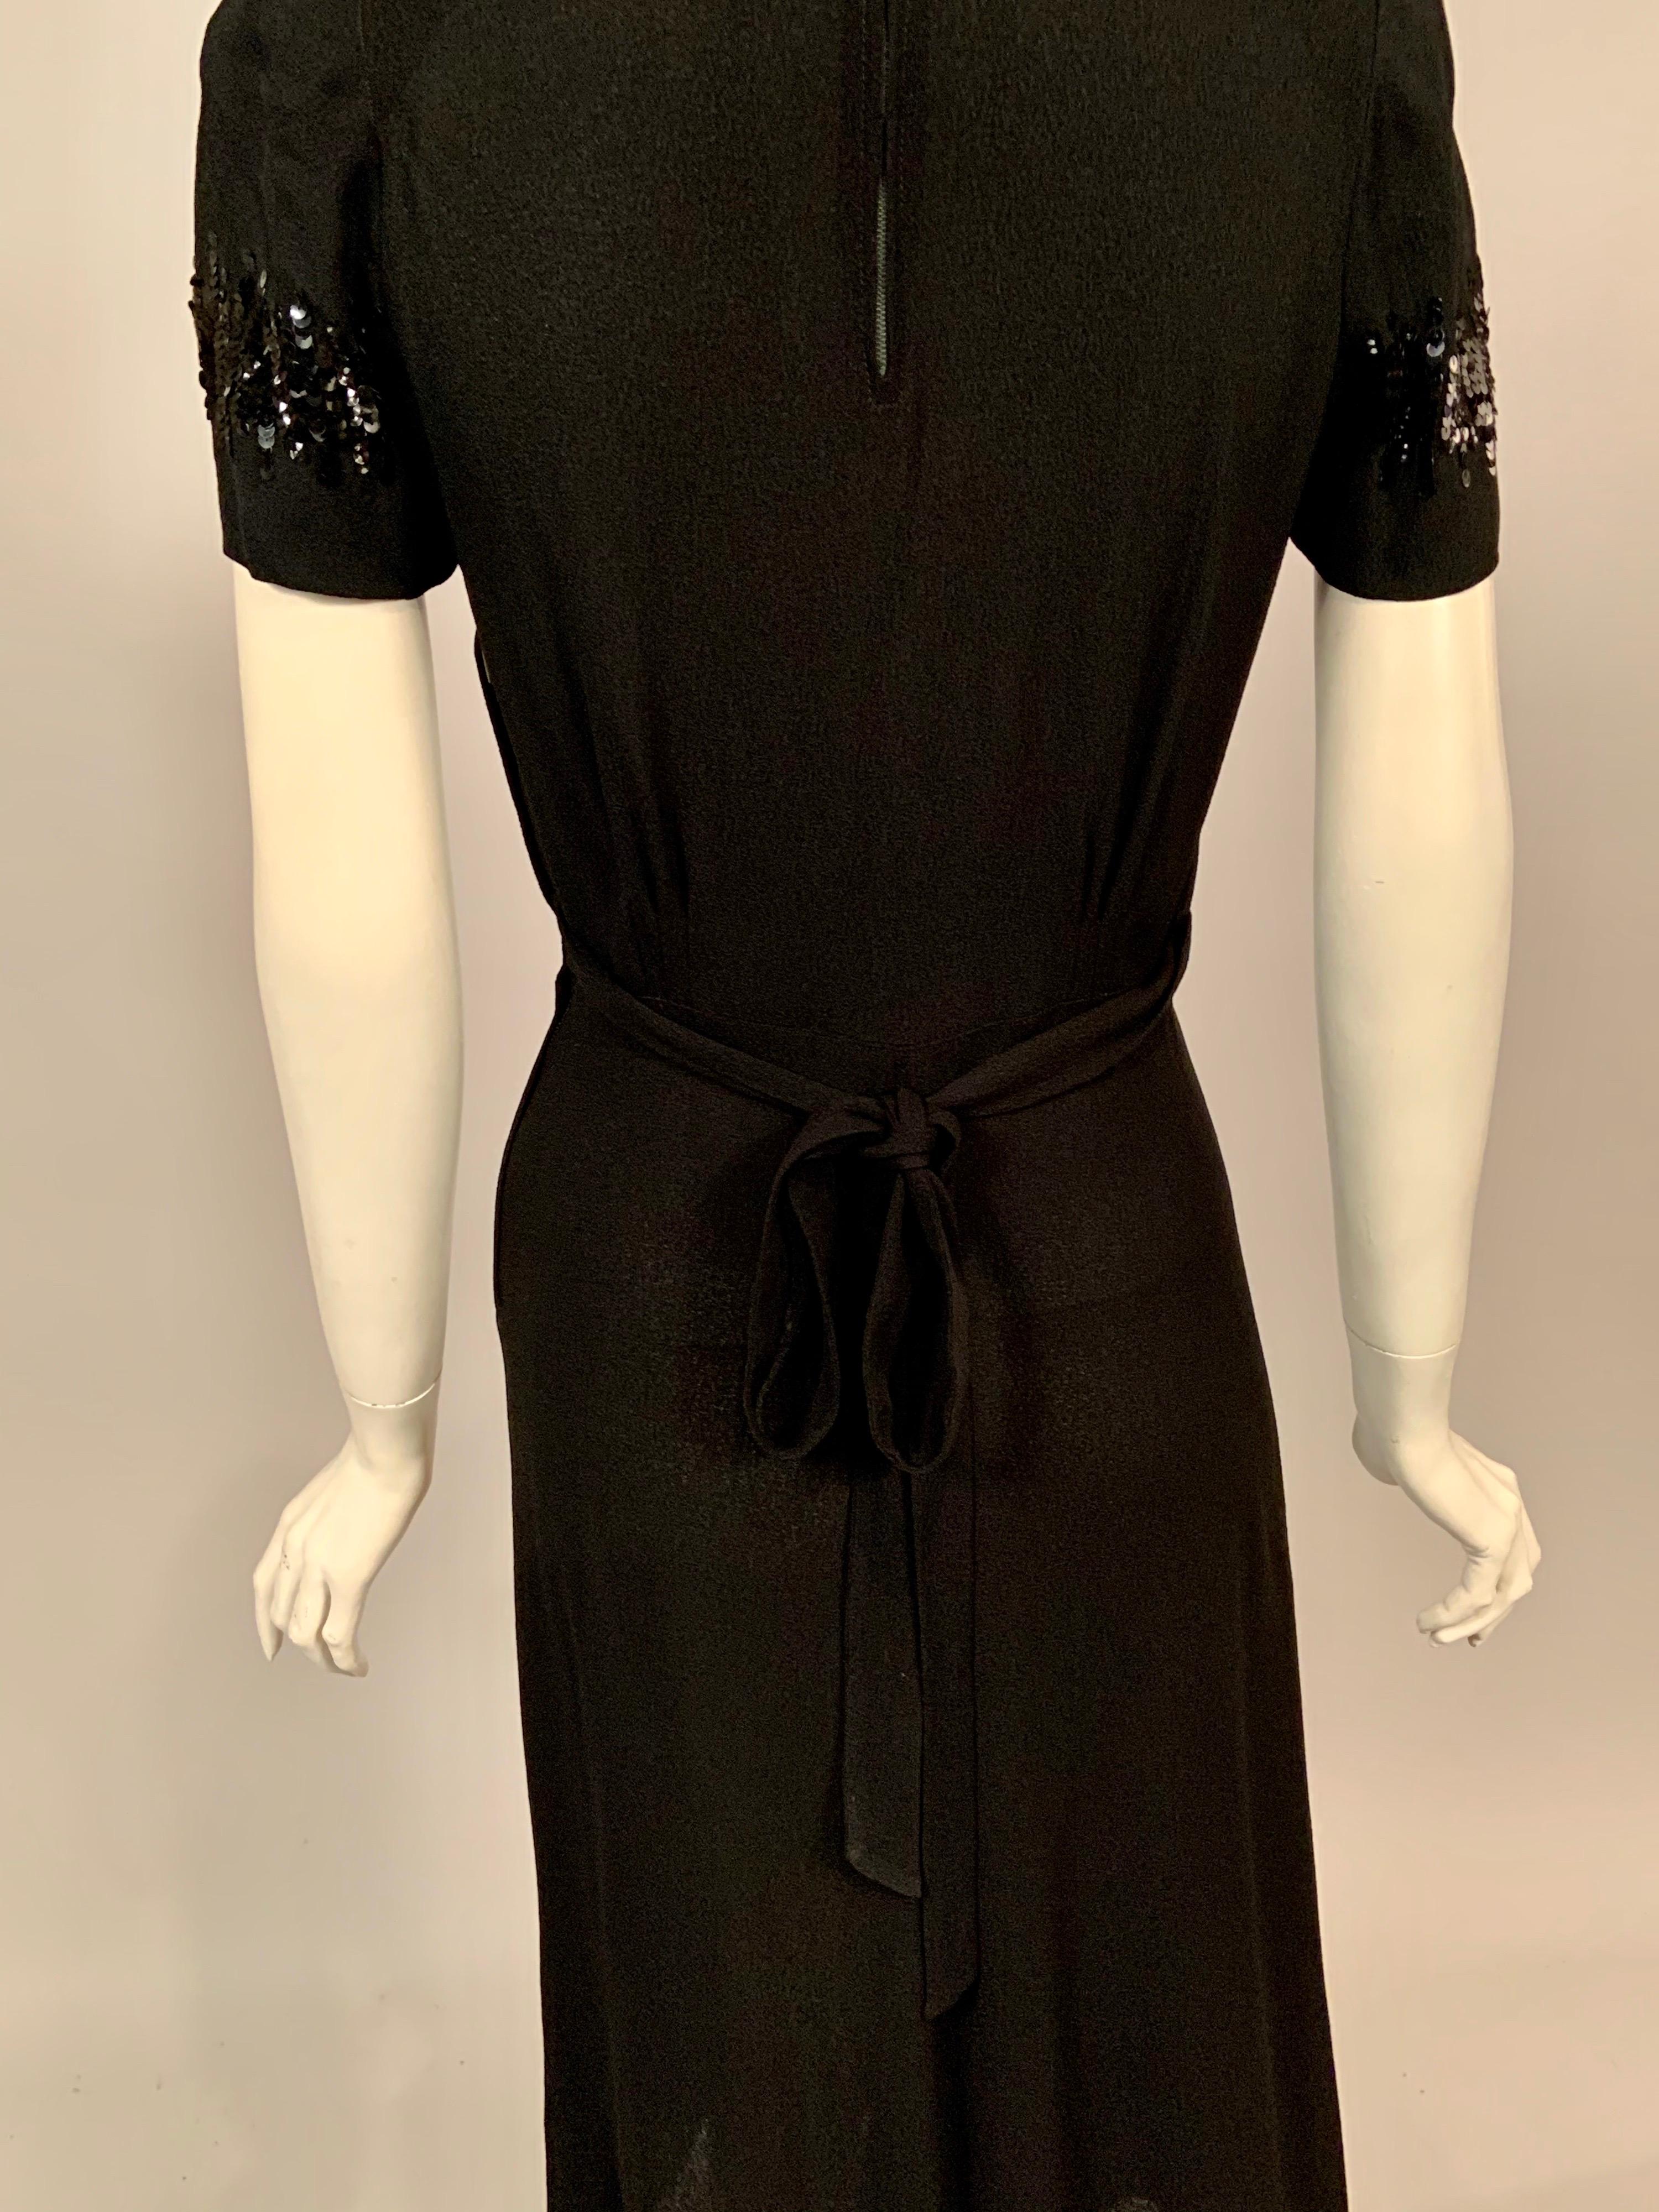 1940's Black Crepe Dress Elaborately Beaded Sheer Top For Sale 1